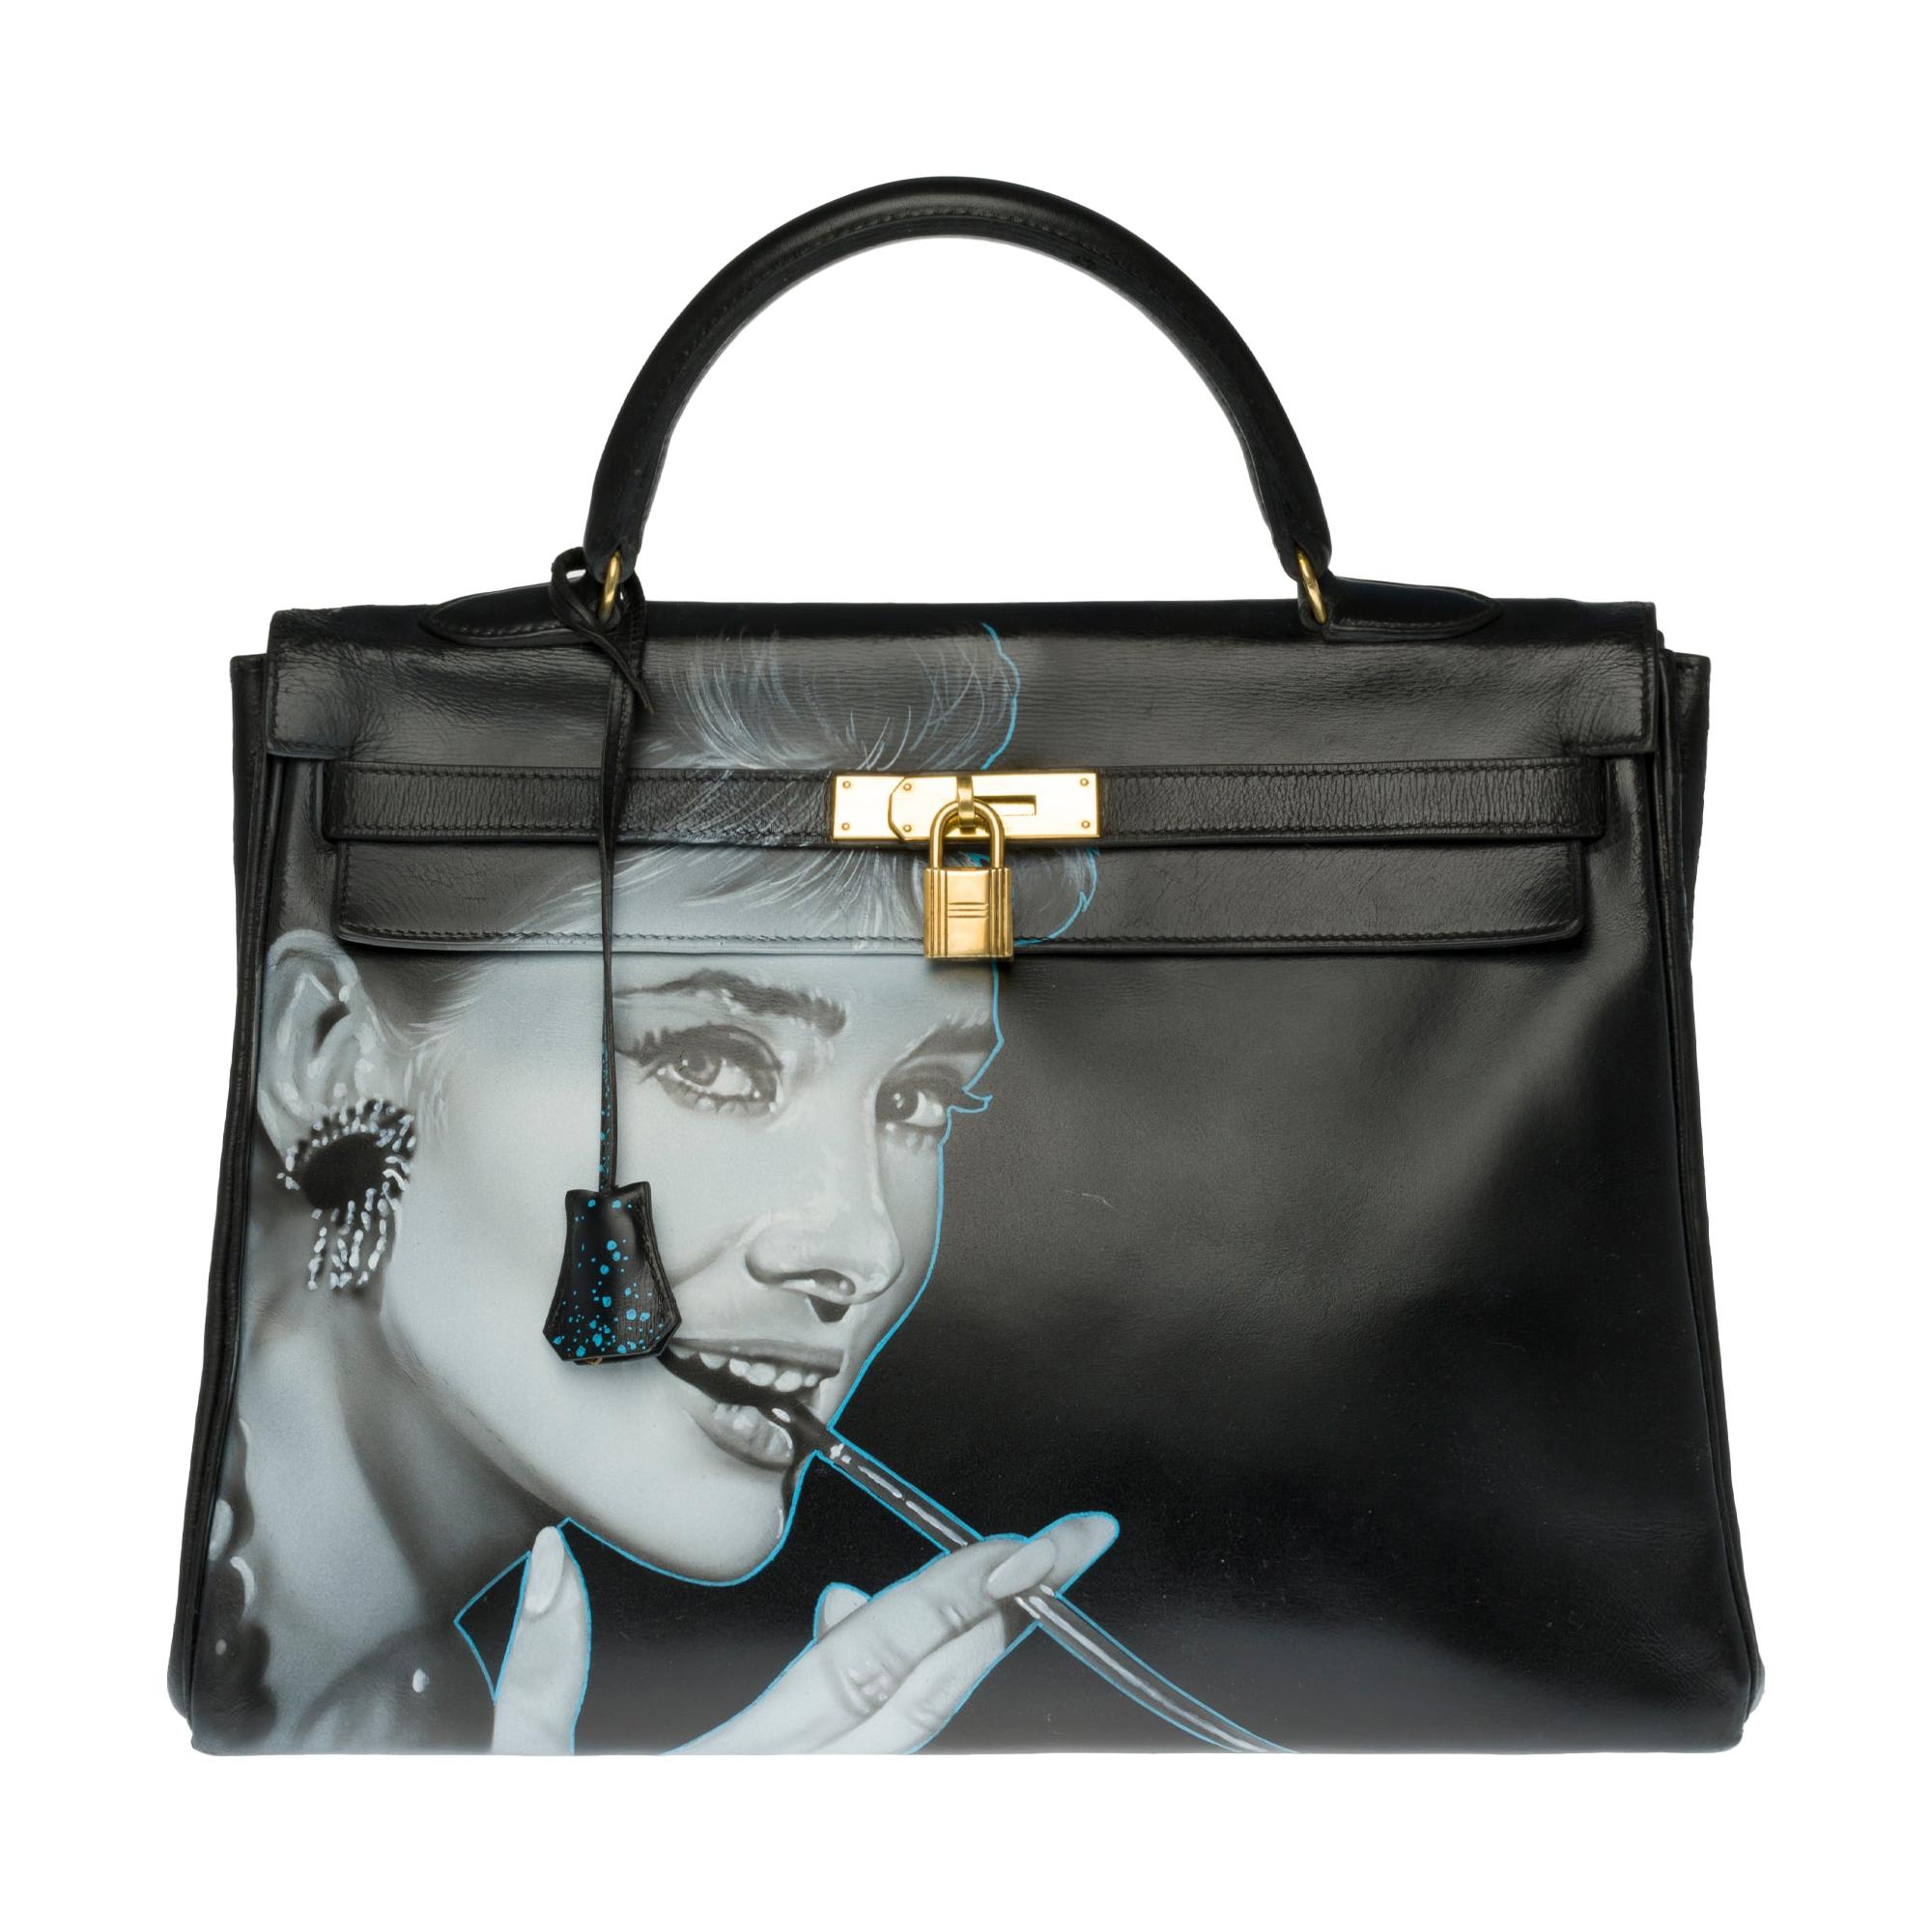 Customized Kelly 35 "Audrey Hepburn" handbag in black calfskin and gold hardware